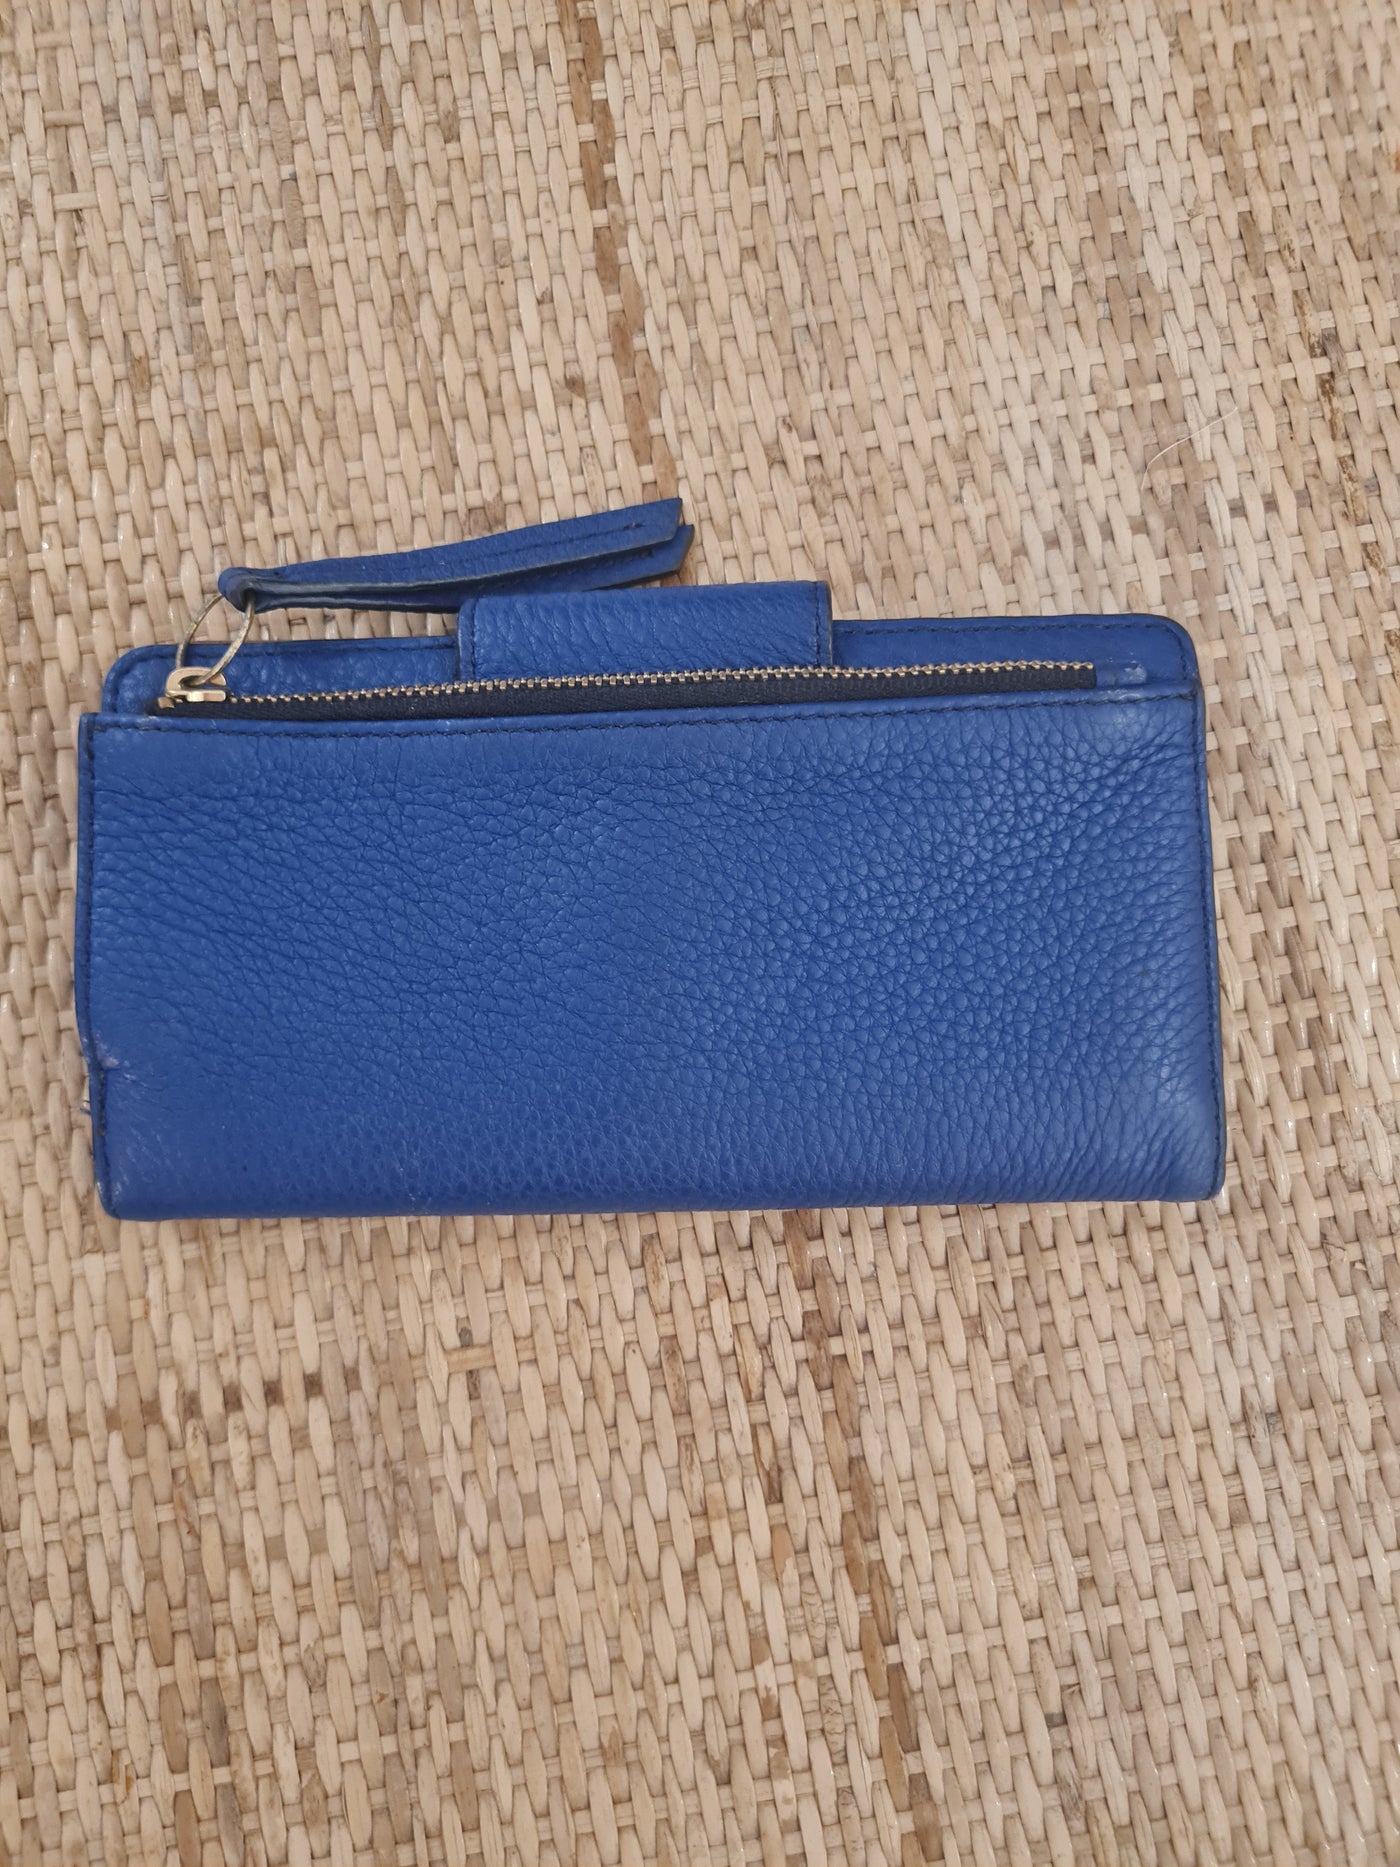 Fossil blue leather purse